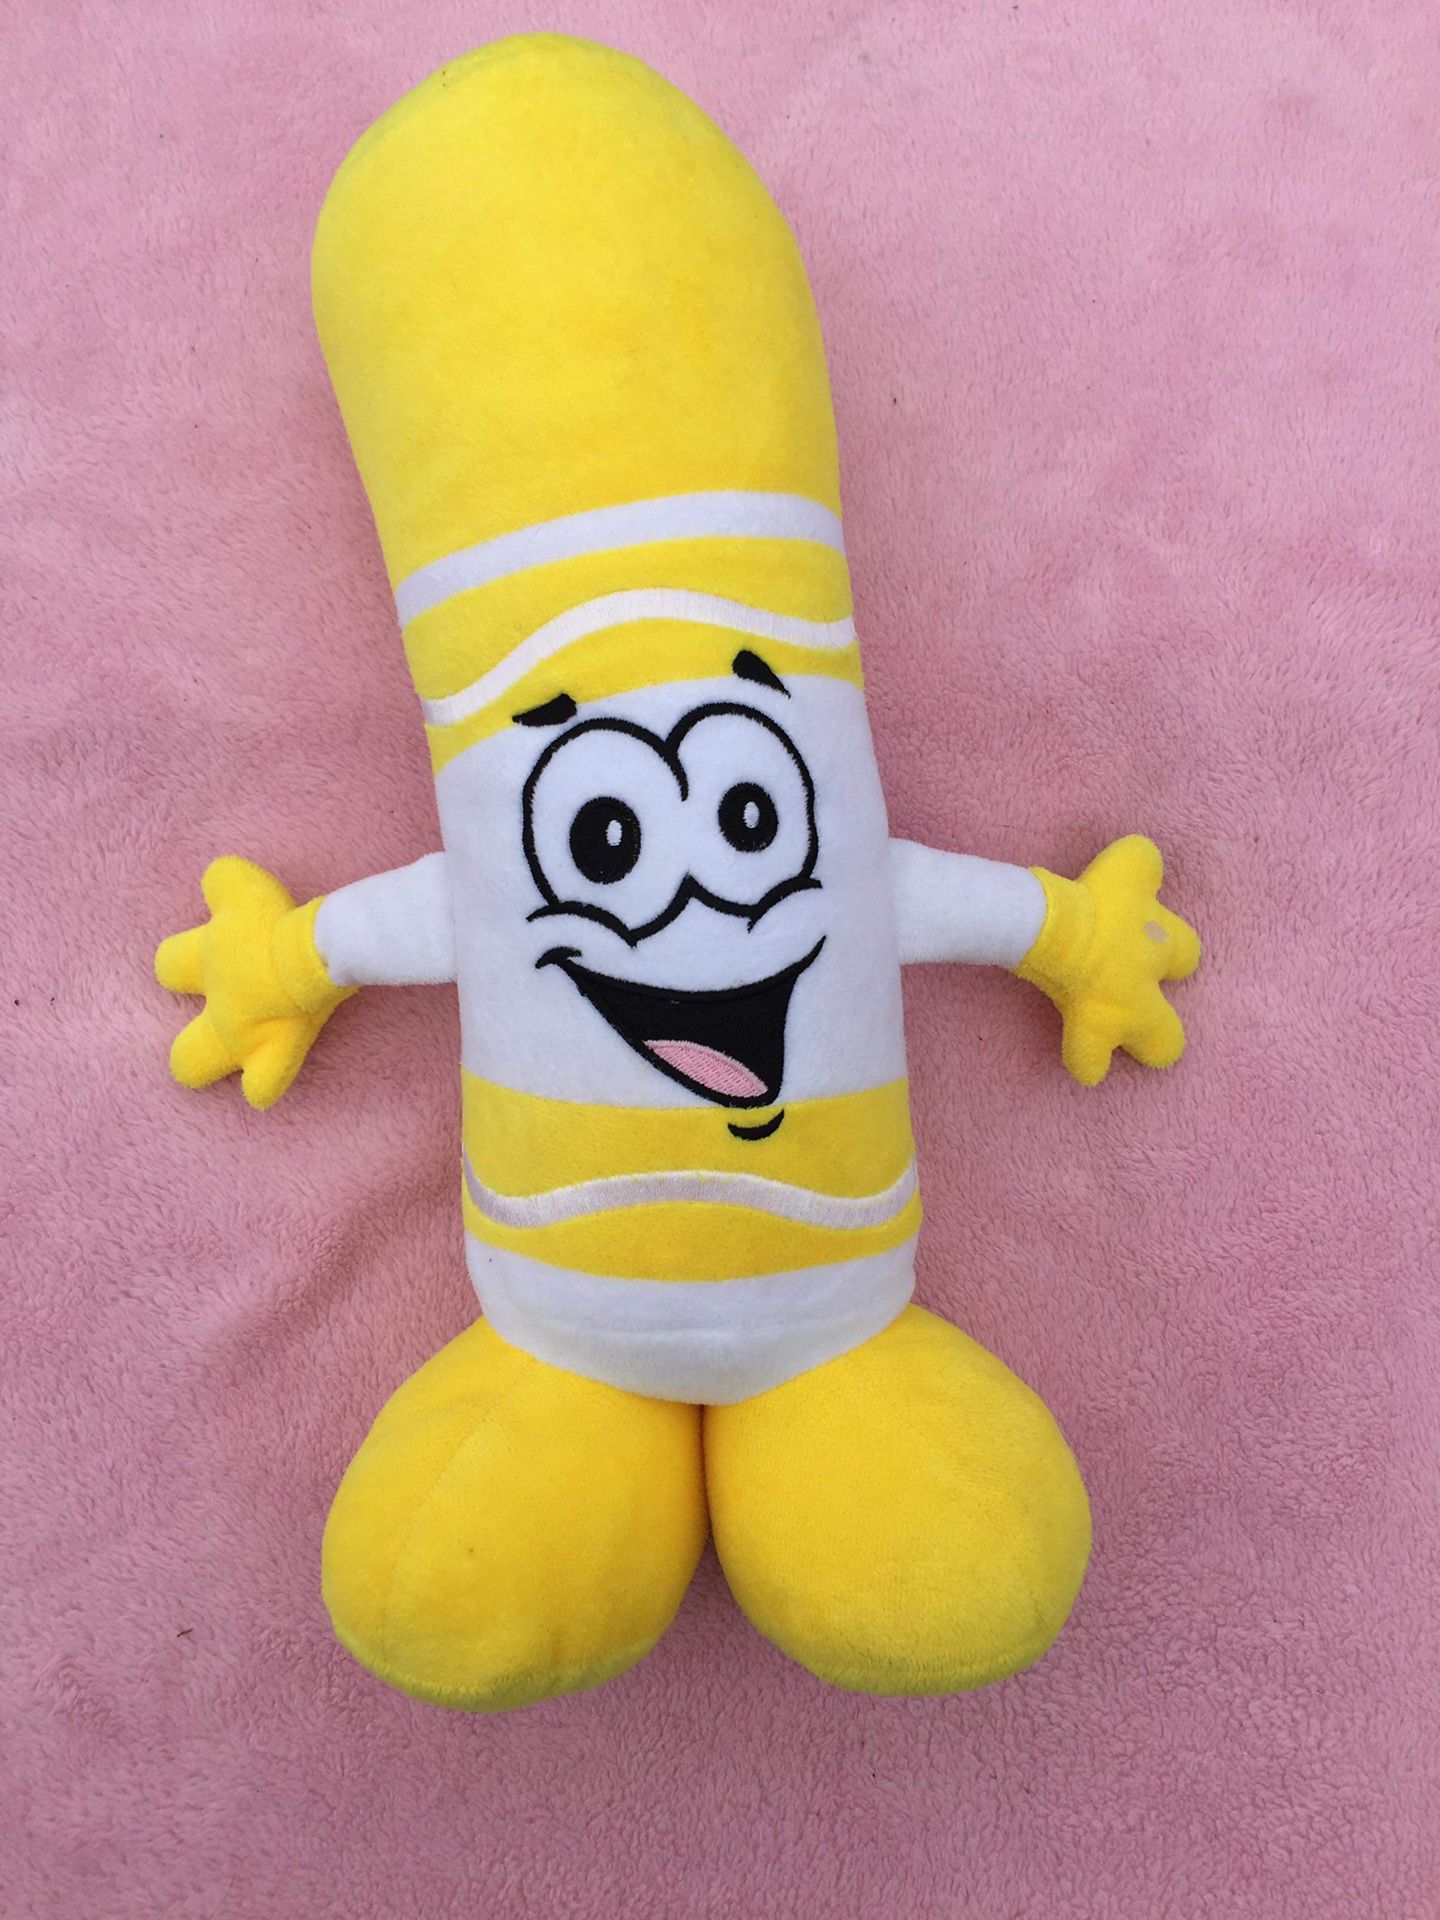 Crayola Yellow Crayon Marker  "LIGHTNING BUG" Plush Stuffed Animal 14" Bean Bag